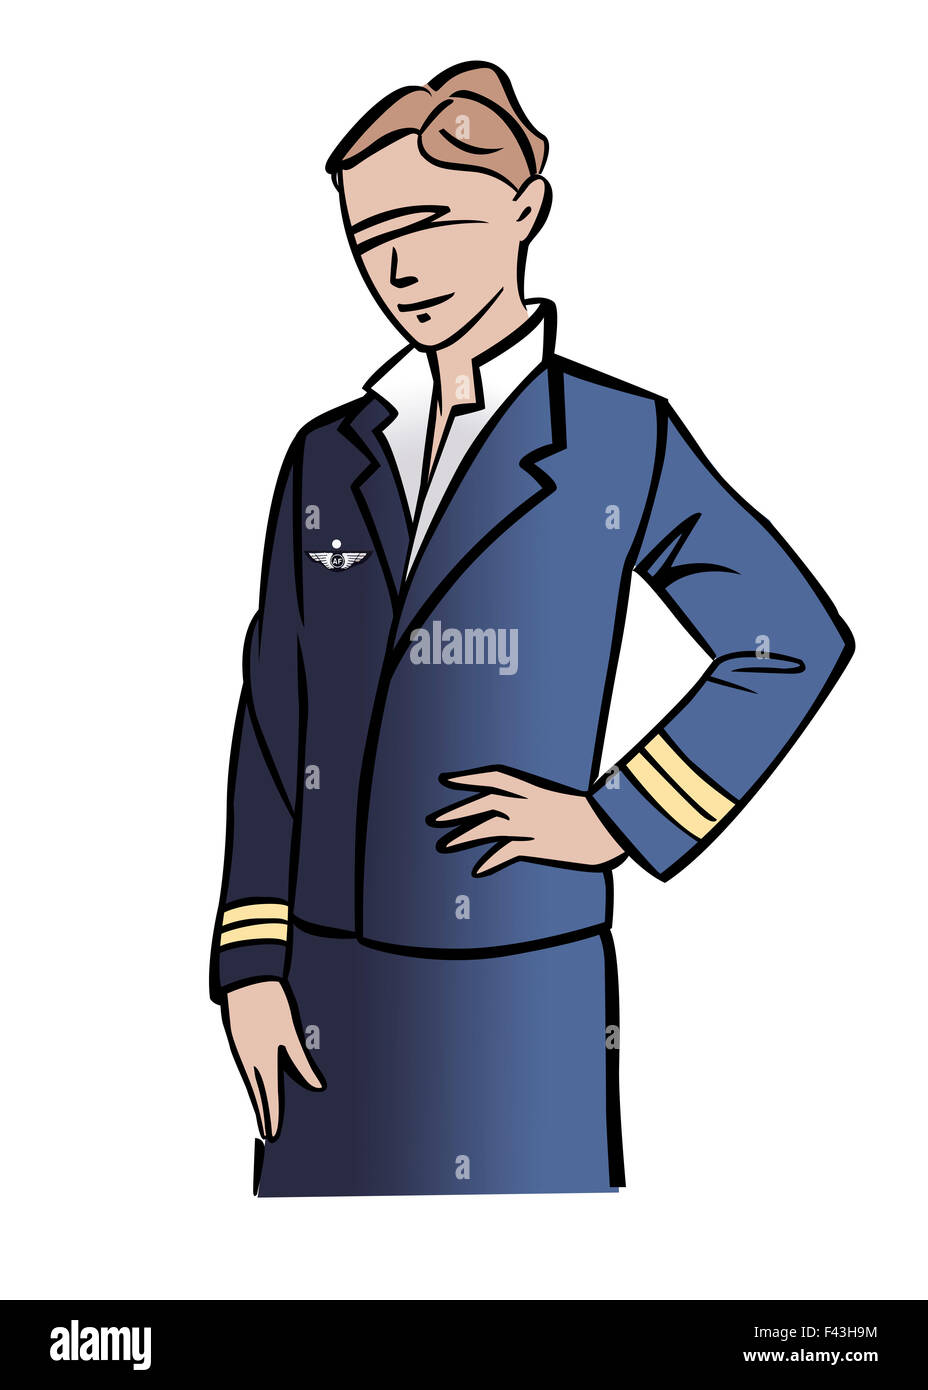 Illustration of a female pilot or flight attendant Stock Photo